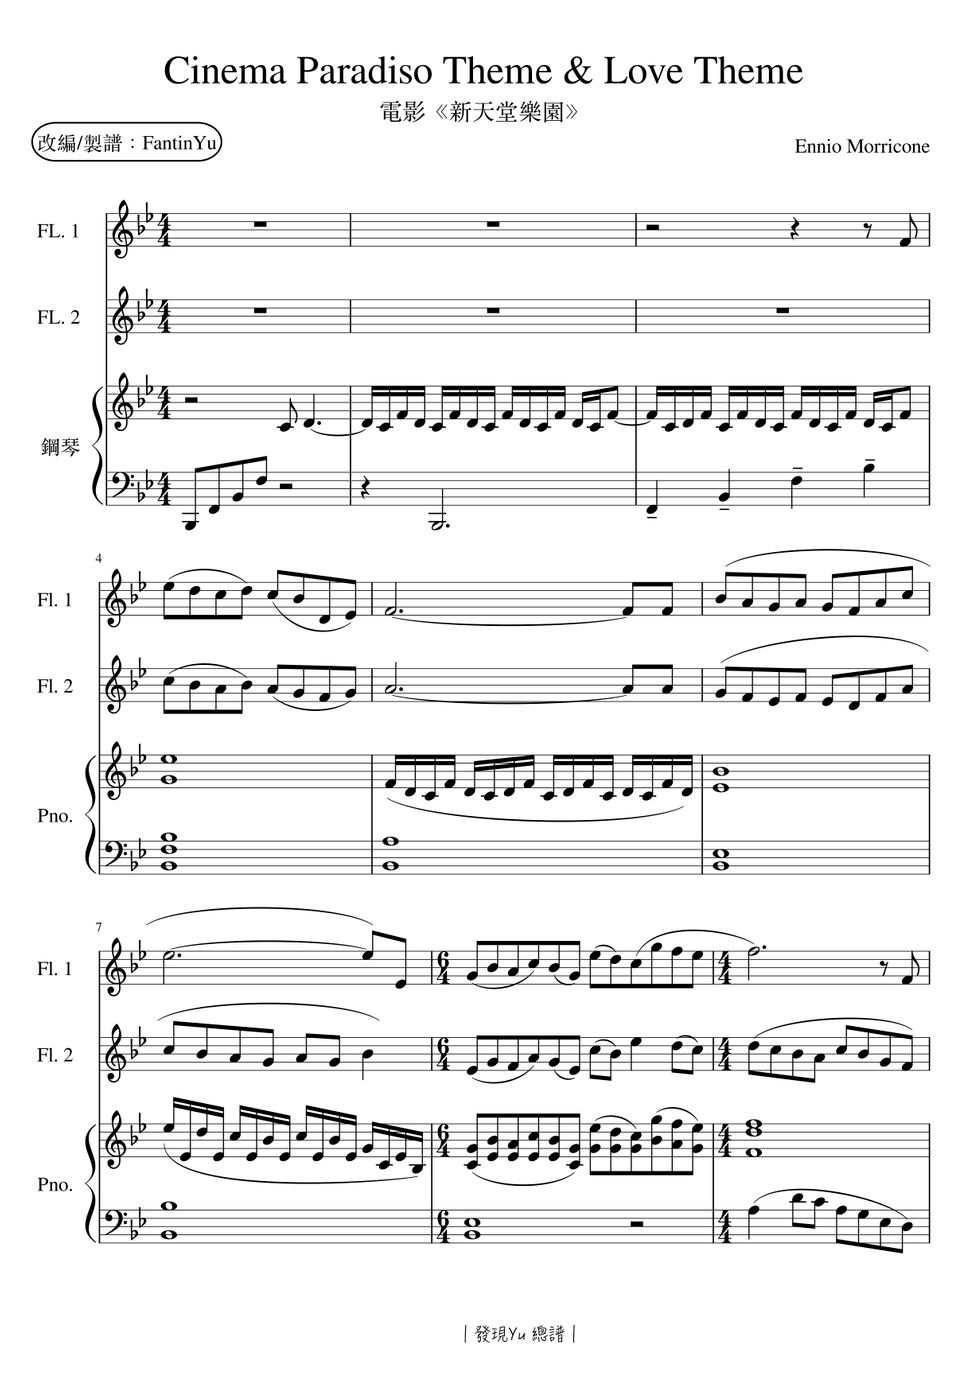 Ennio Morricone - ｜Cinema Paradiso Theme & Love Theme｜ (Trio for FL. PN.) by FantinYu